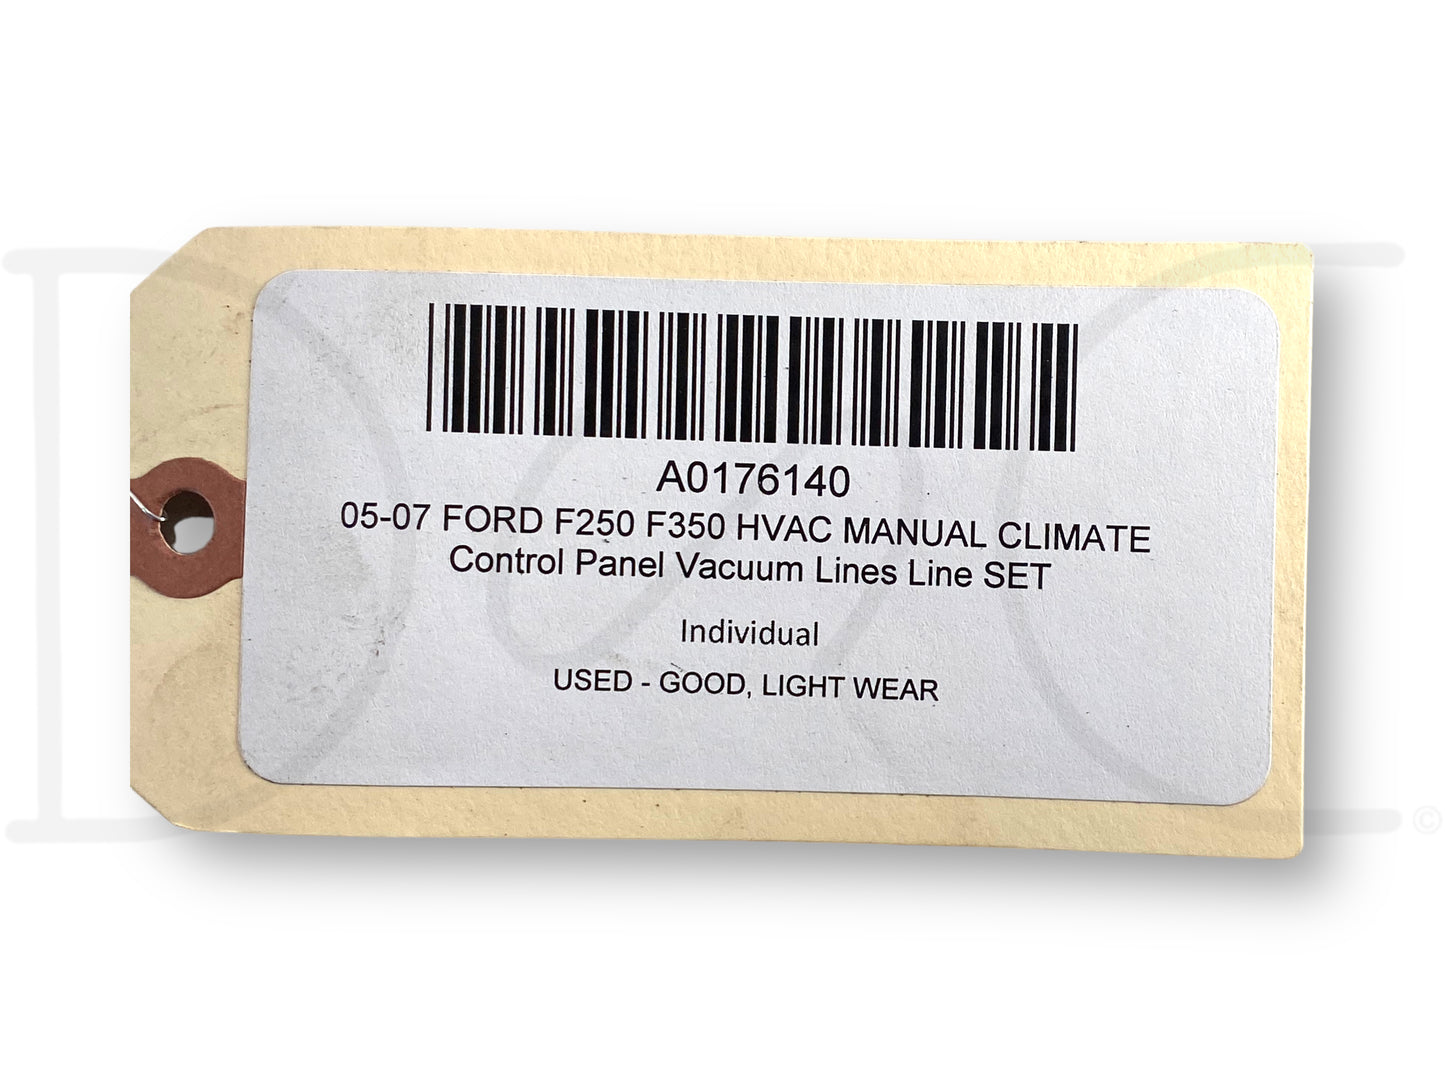 05-07 Ford F250 F350 HVAC Manual Climate Control Panel Vacuum Lines Line Set